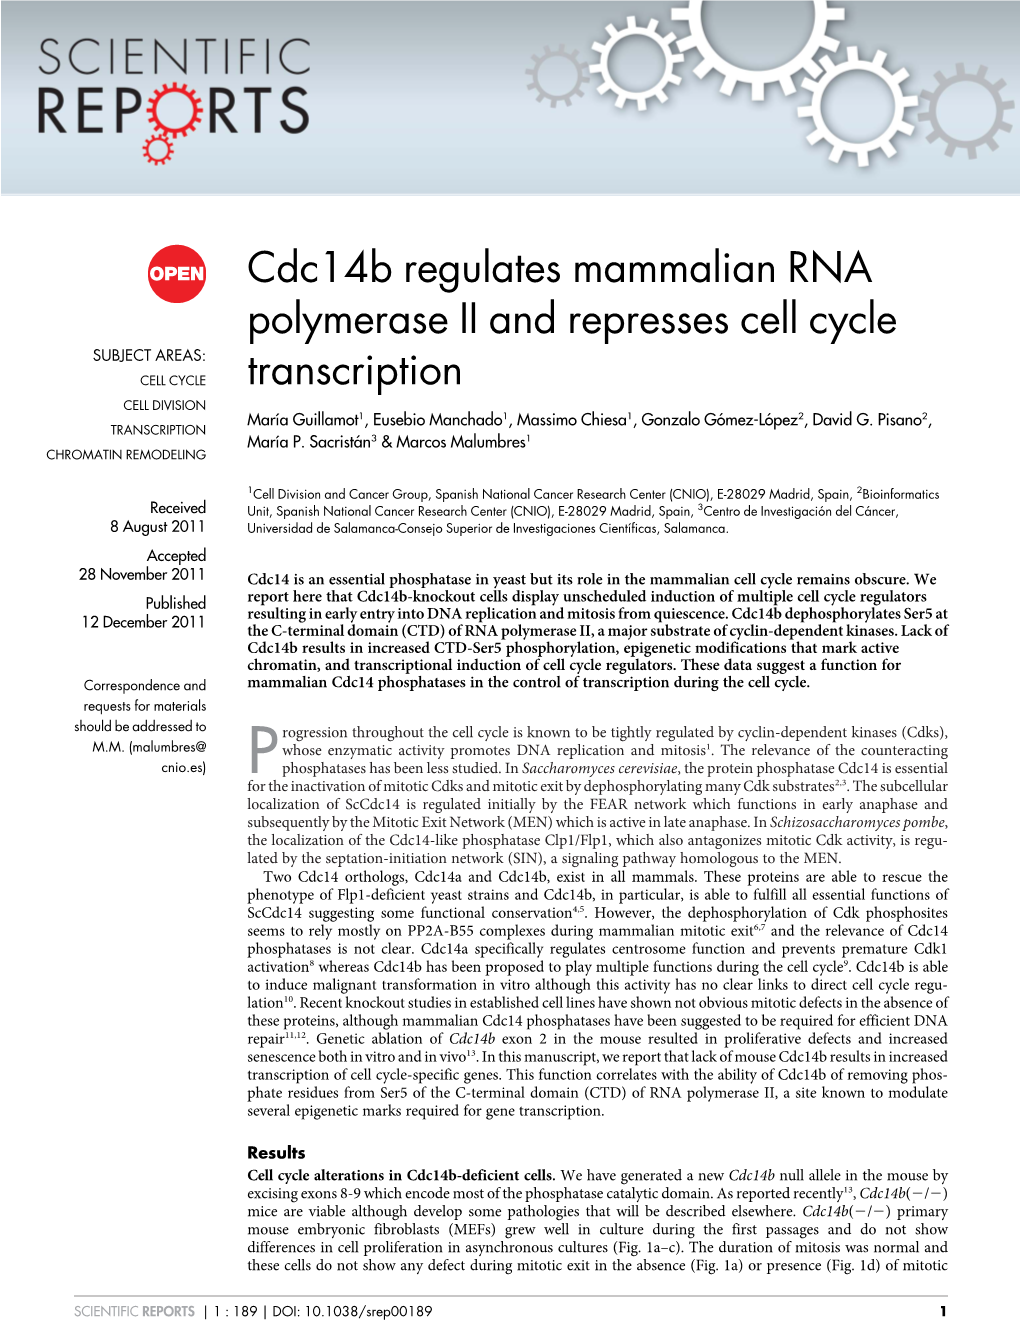 Cdc14b Regulates Mammalian RNA Polymerase II and Represses Cell